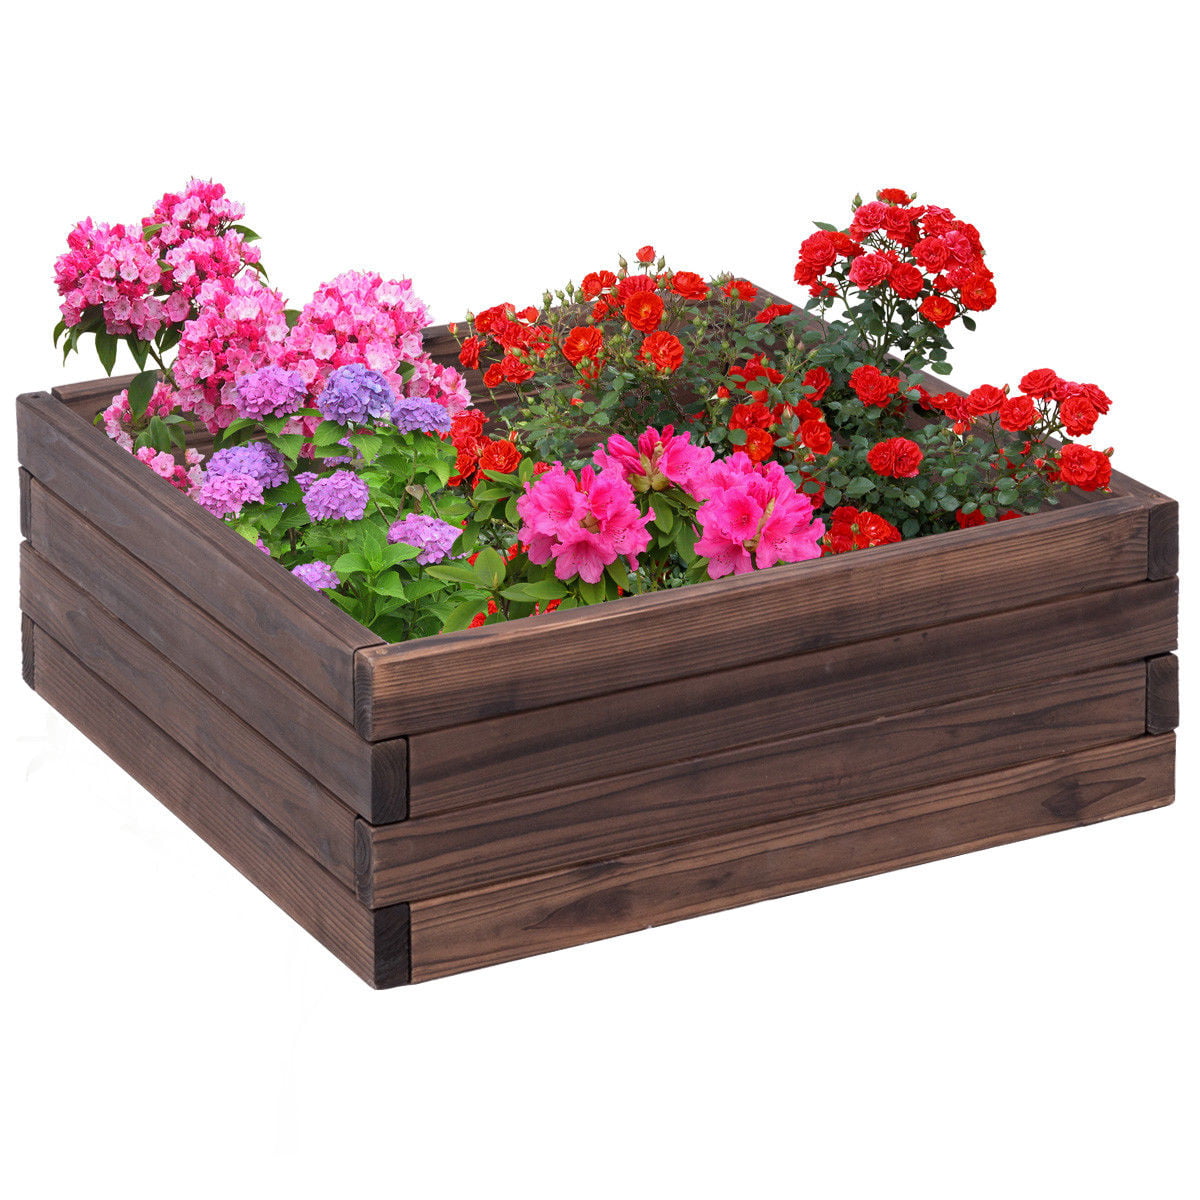 square raised garden bed flower vegetables seeds planter kit elevated